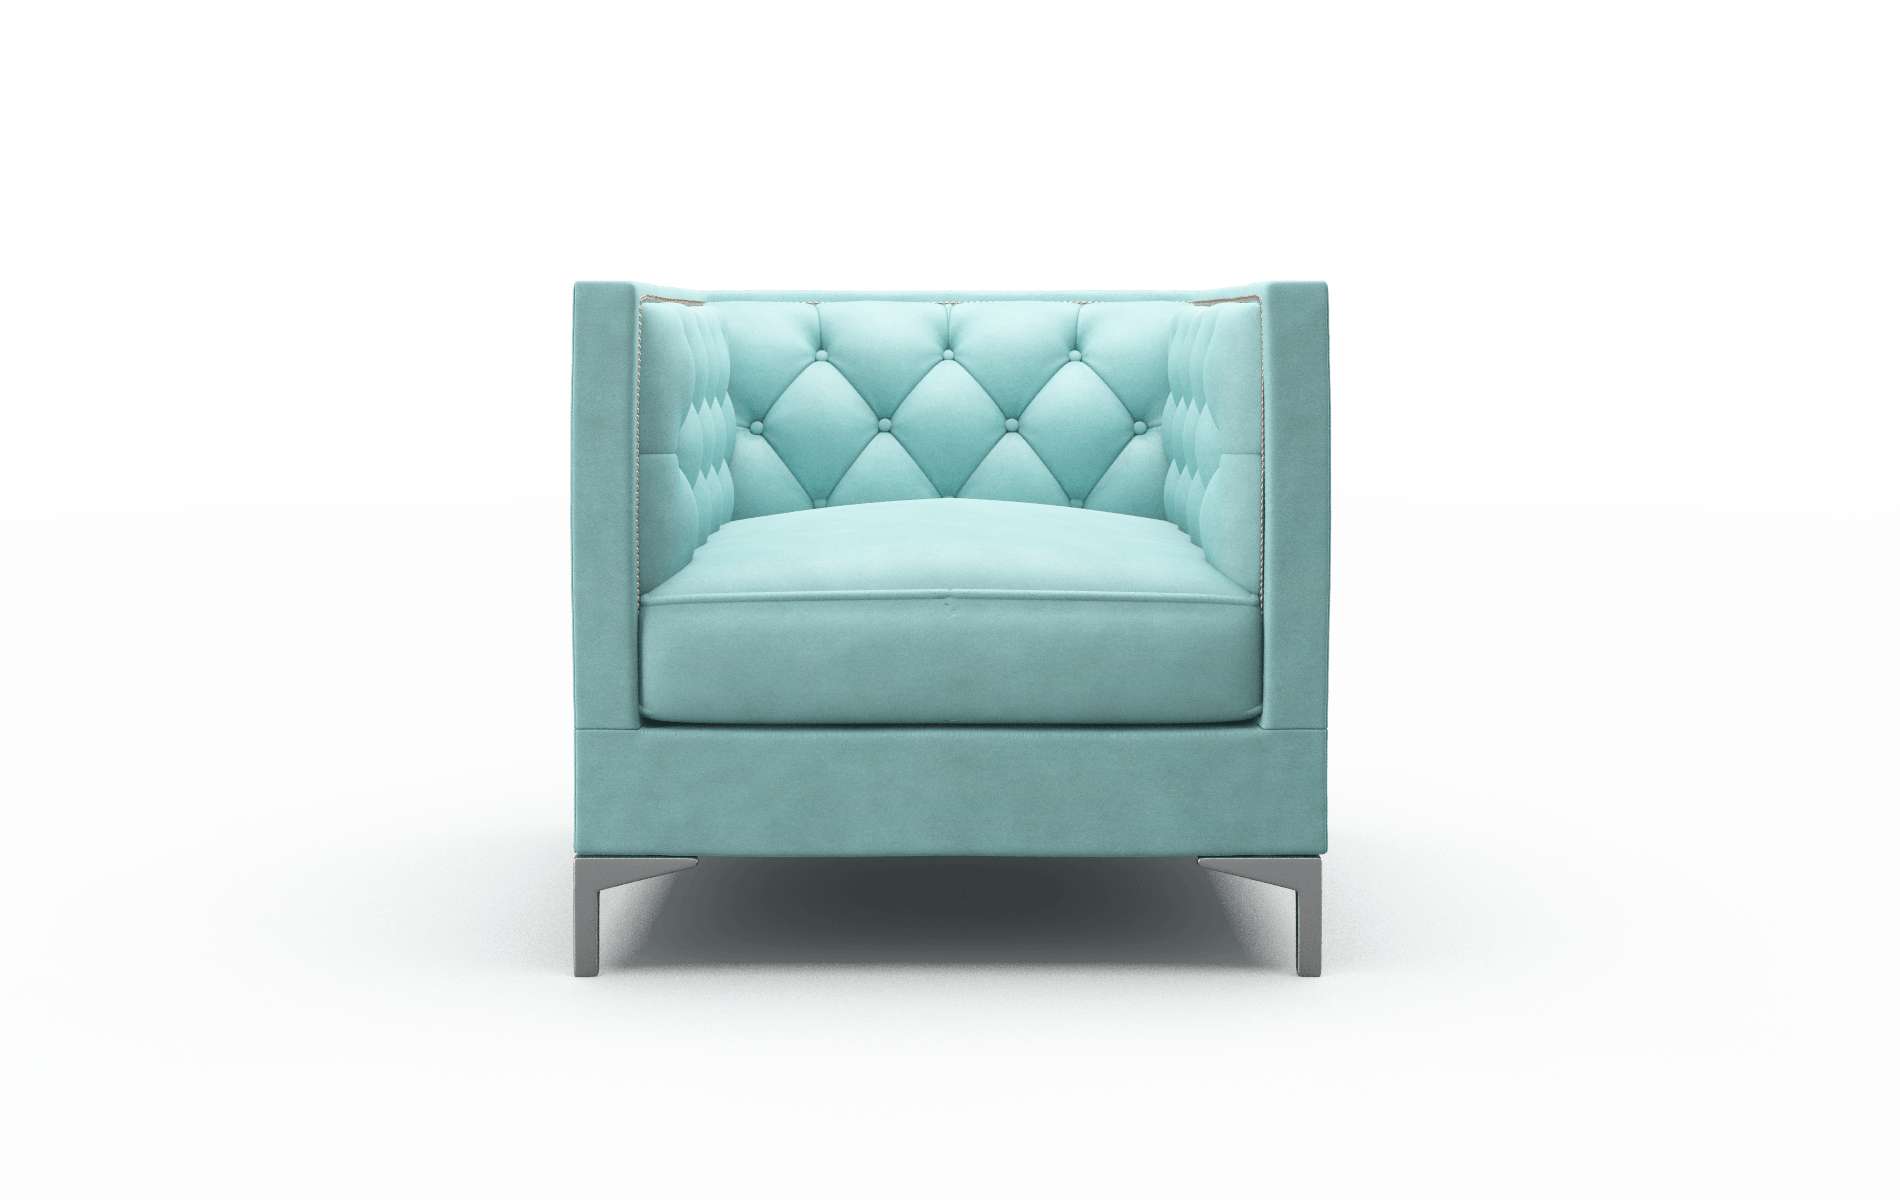 Gosford Curious Turquoise Chair metal legs 1